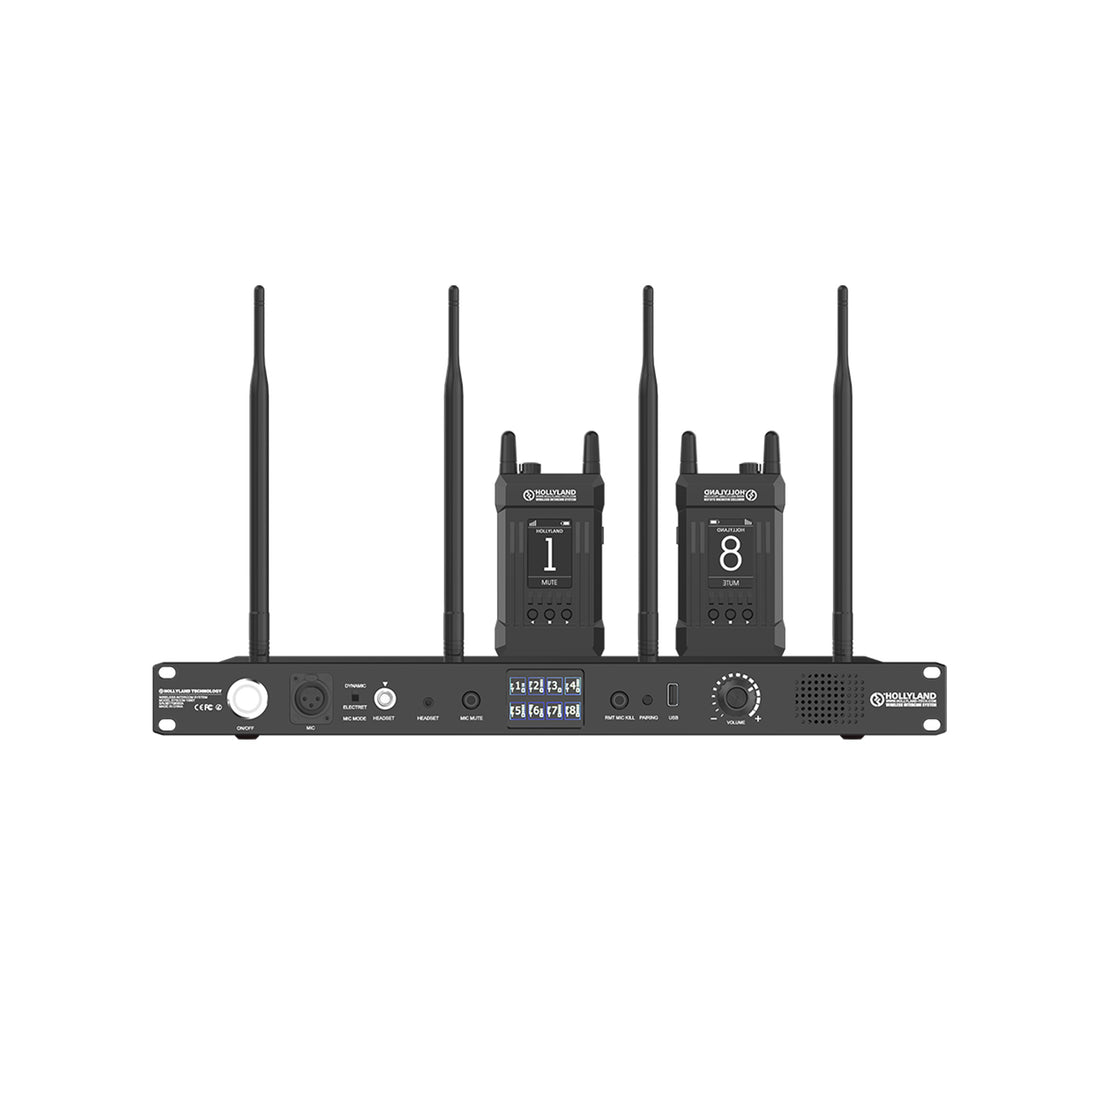 Livecom 1000ft Wireless Intercom System with 4 Beltpacks